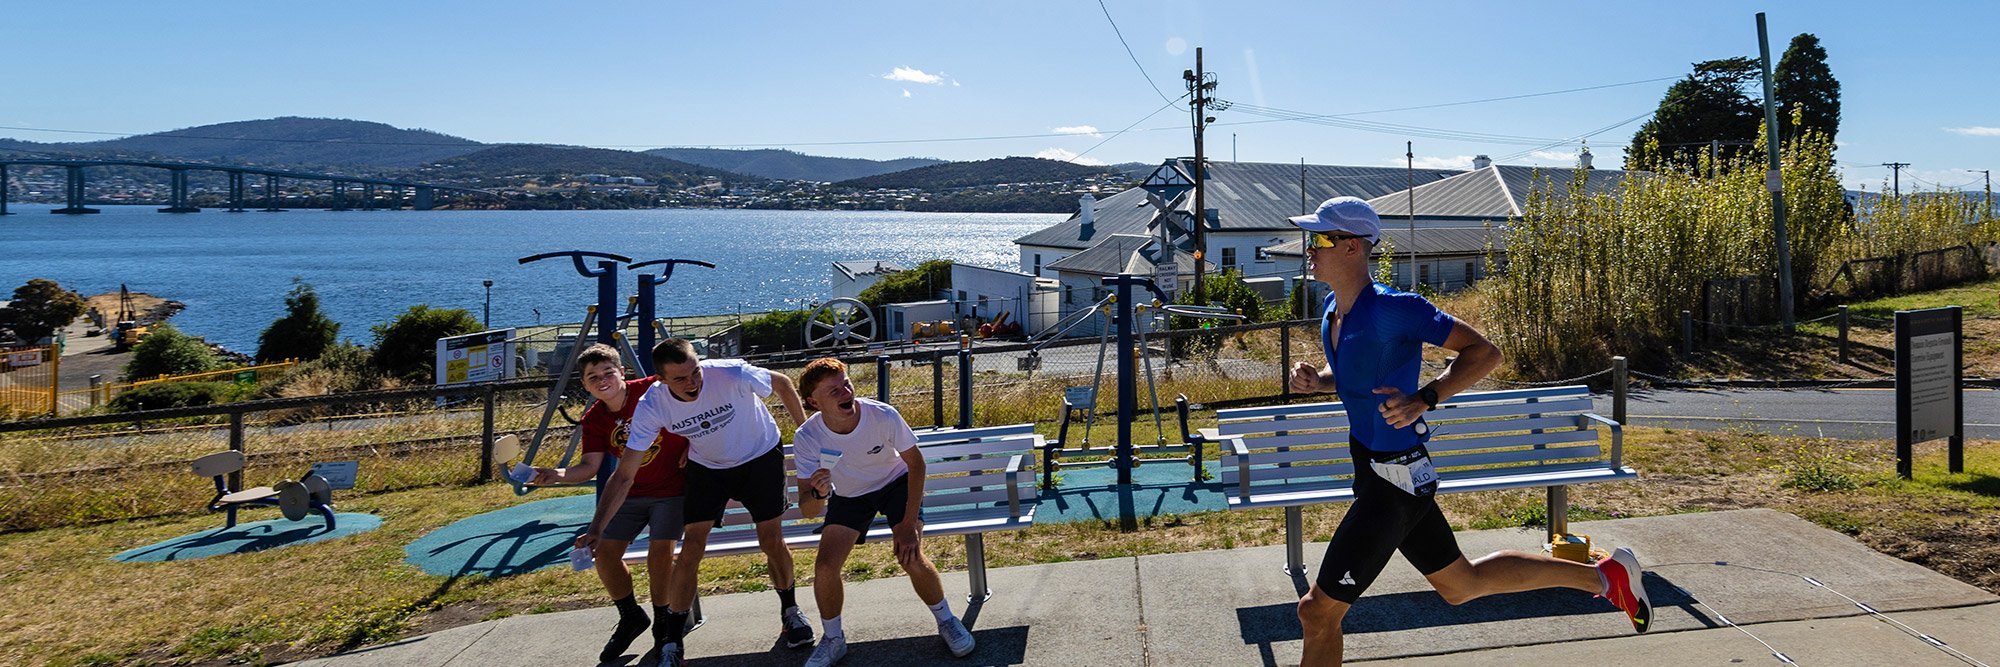 Run course along the scenic River Derwent in Hobart Tasmania